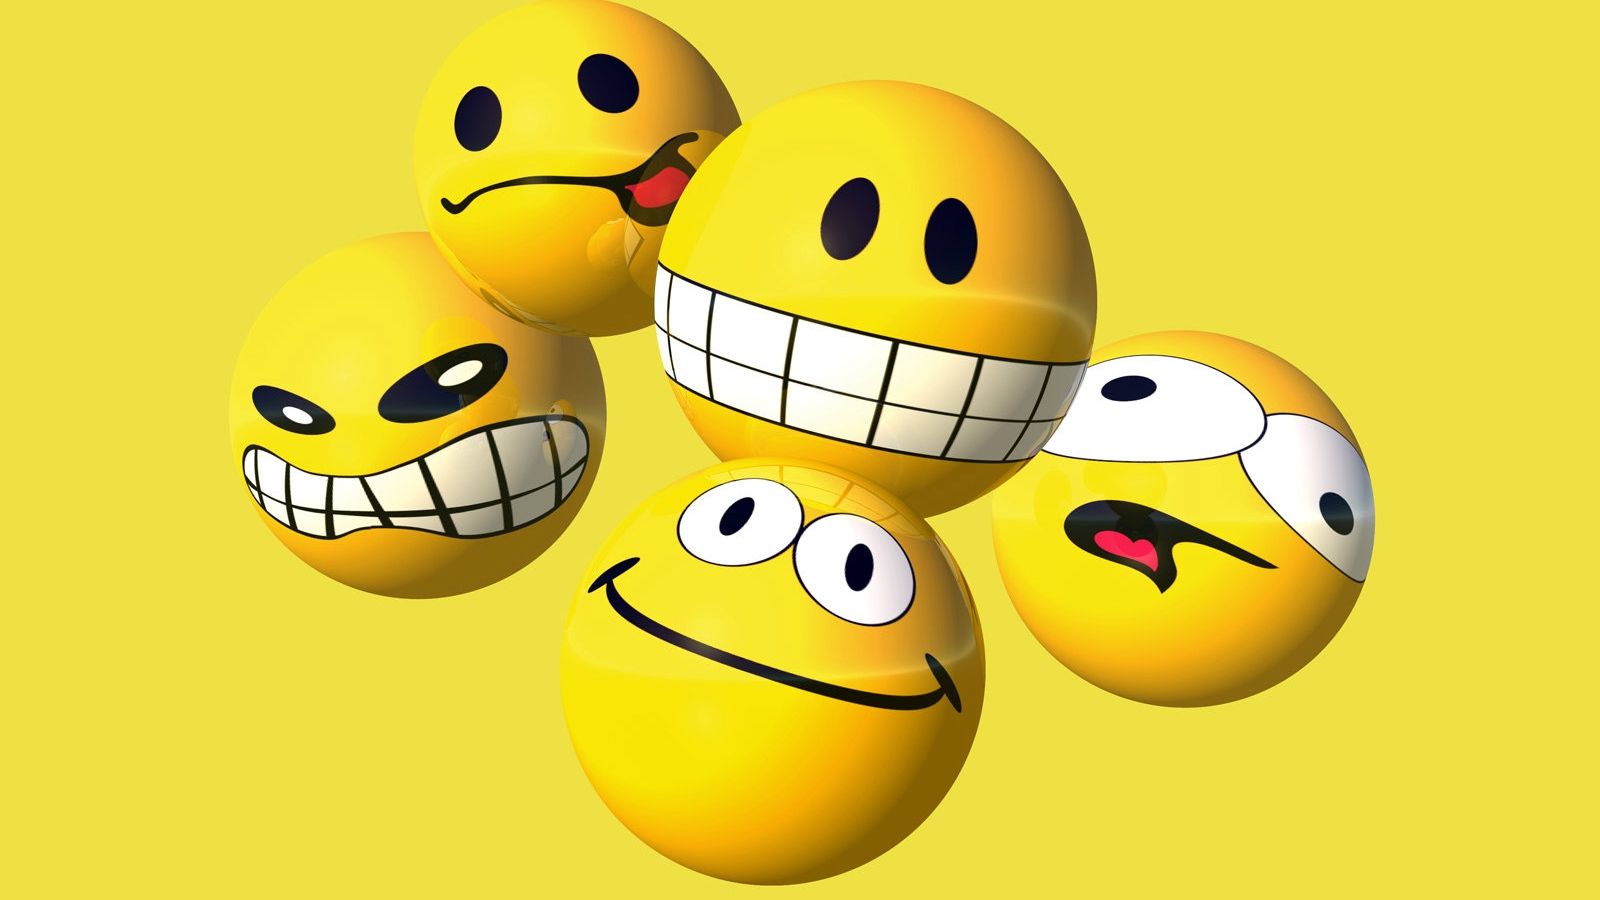 Free download Beautiful Smileys Emoticons Wallpaper For Desktop